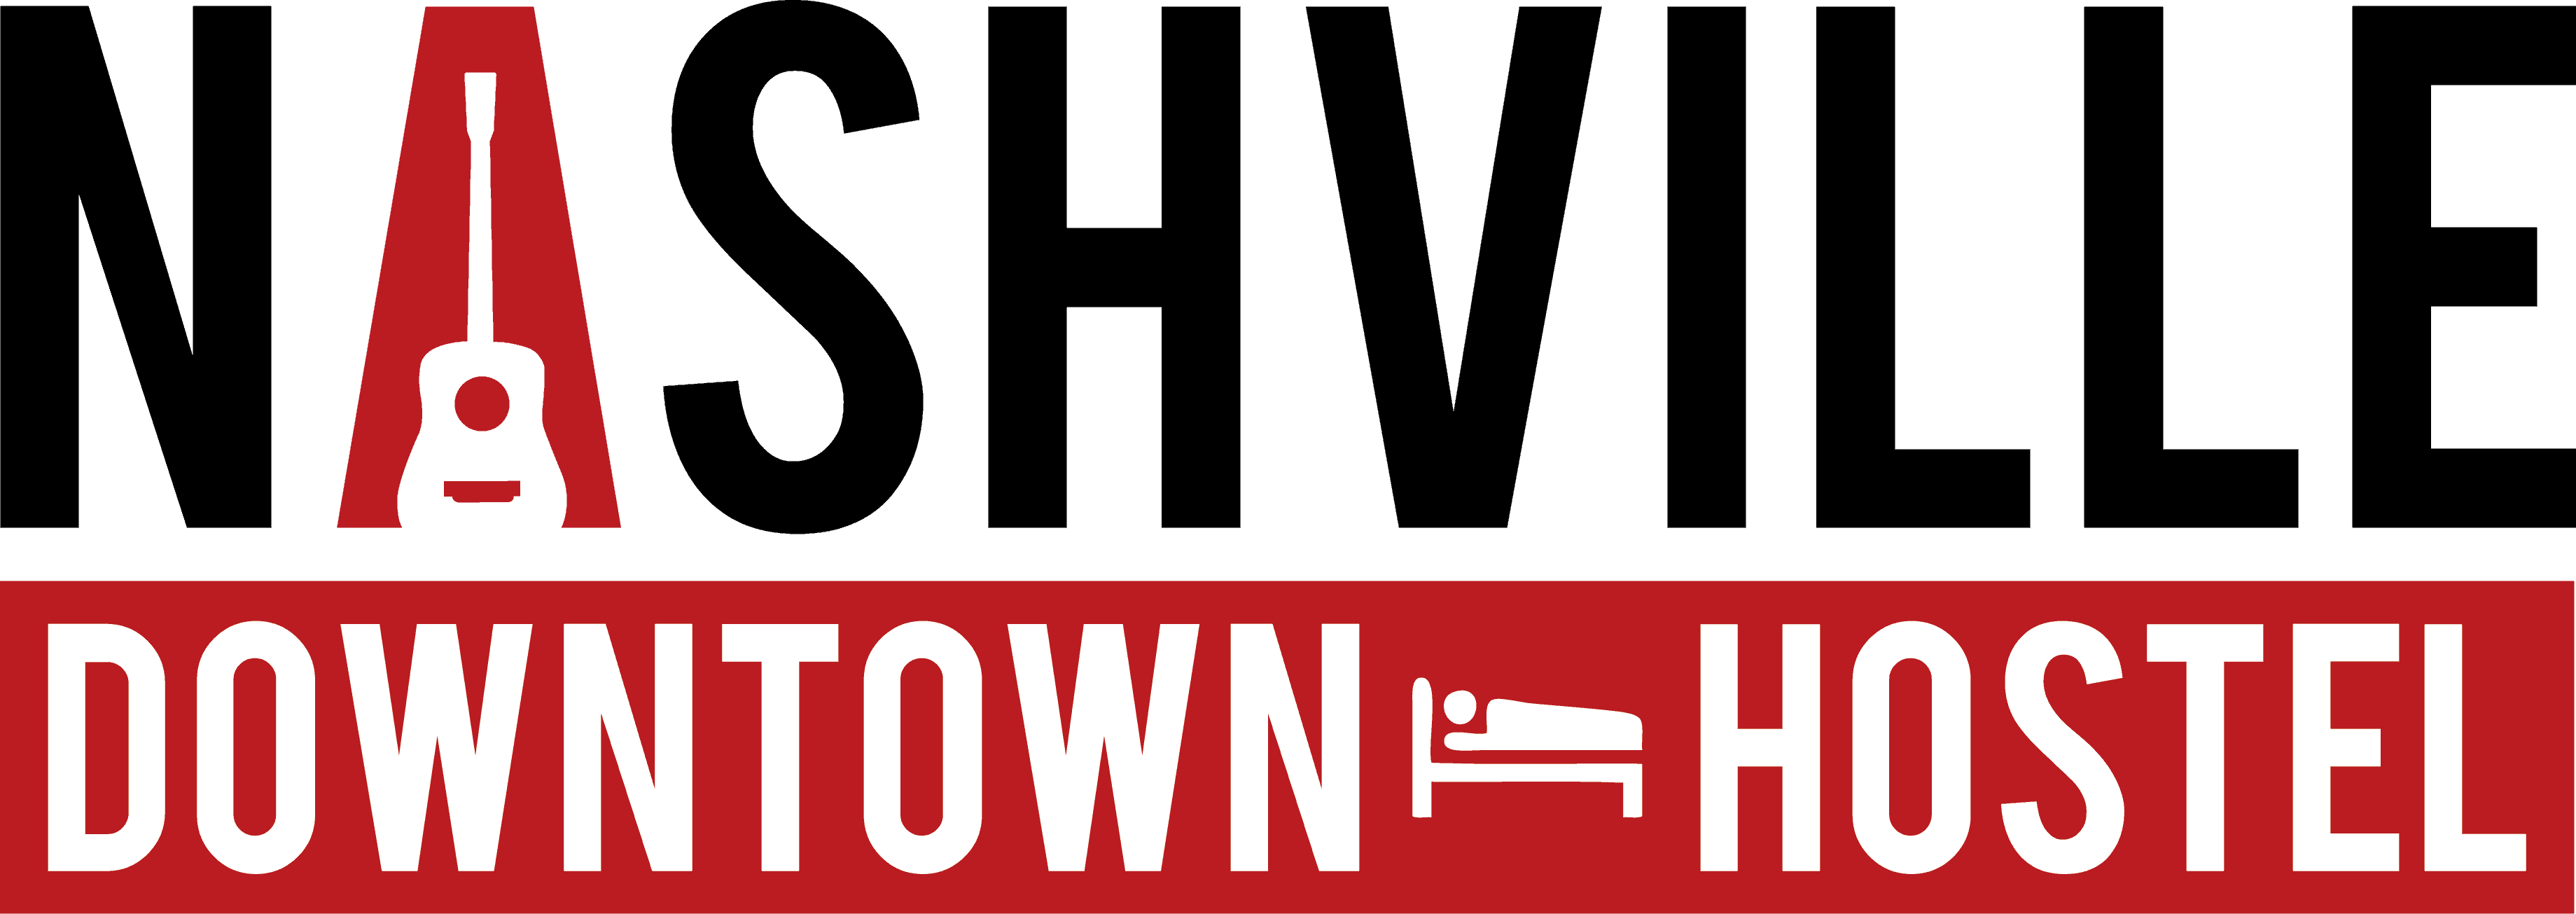 Nashville Downtown Hostel